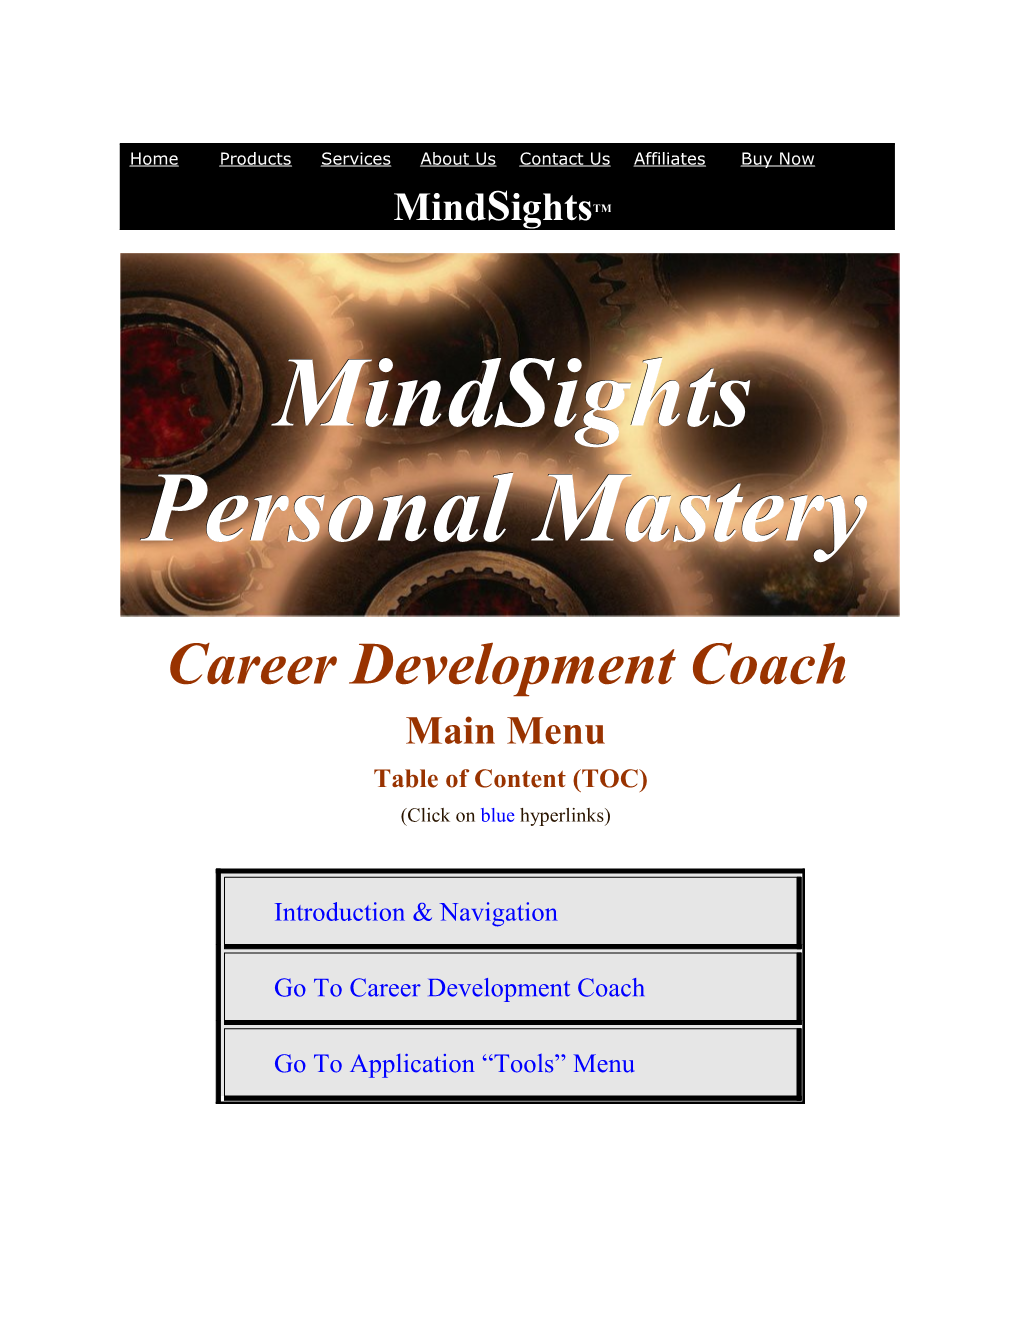 Mindsights Career Development Coach